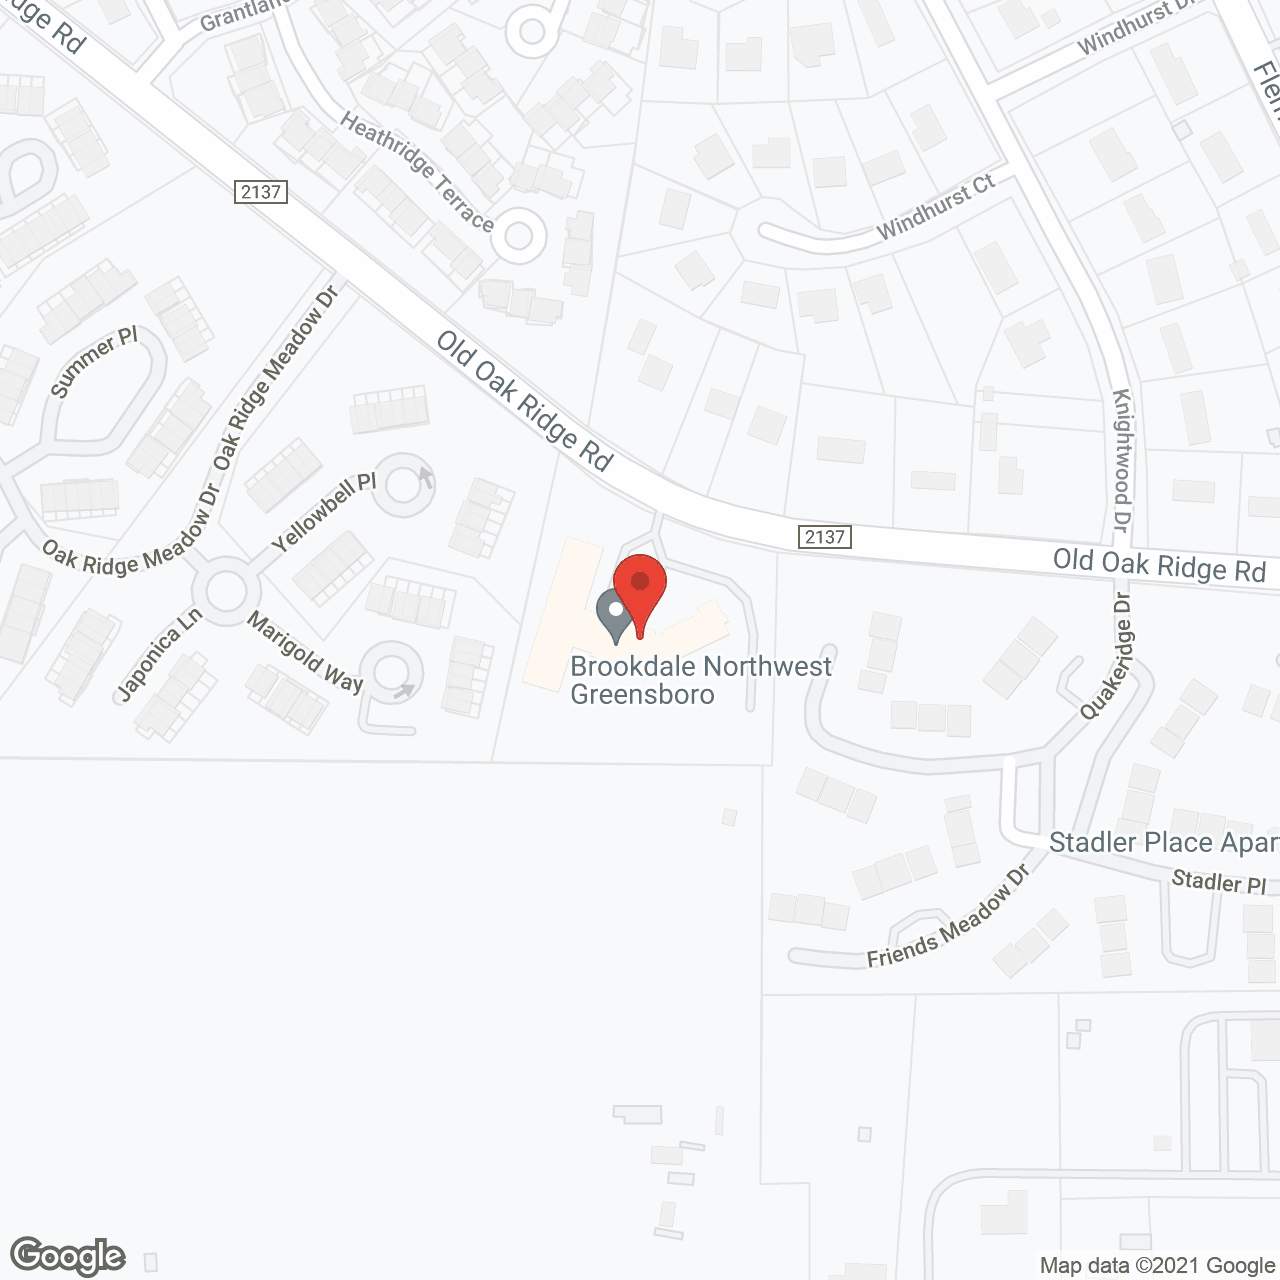 Brookdale Northwest Greensboro in google map